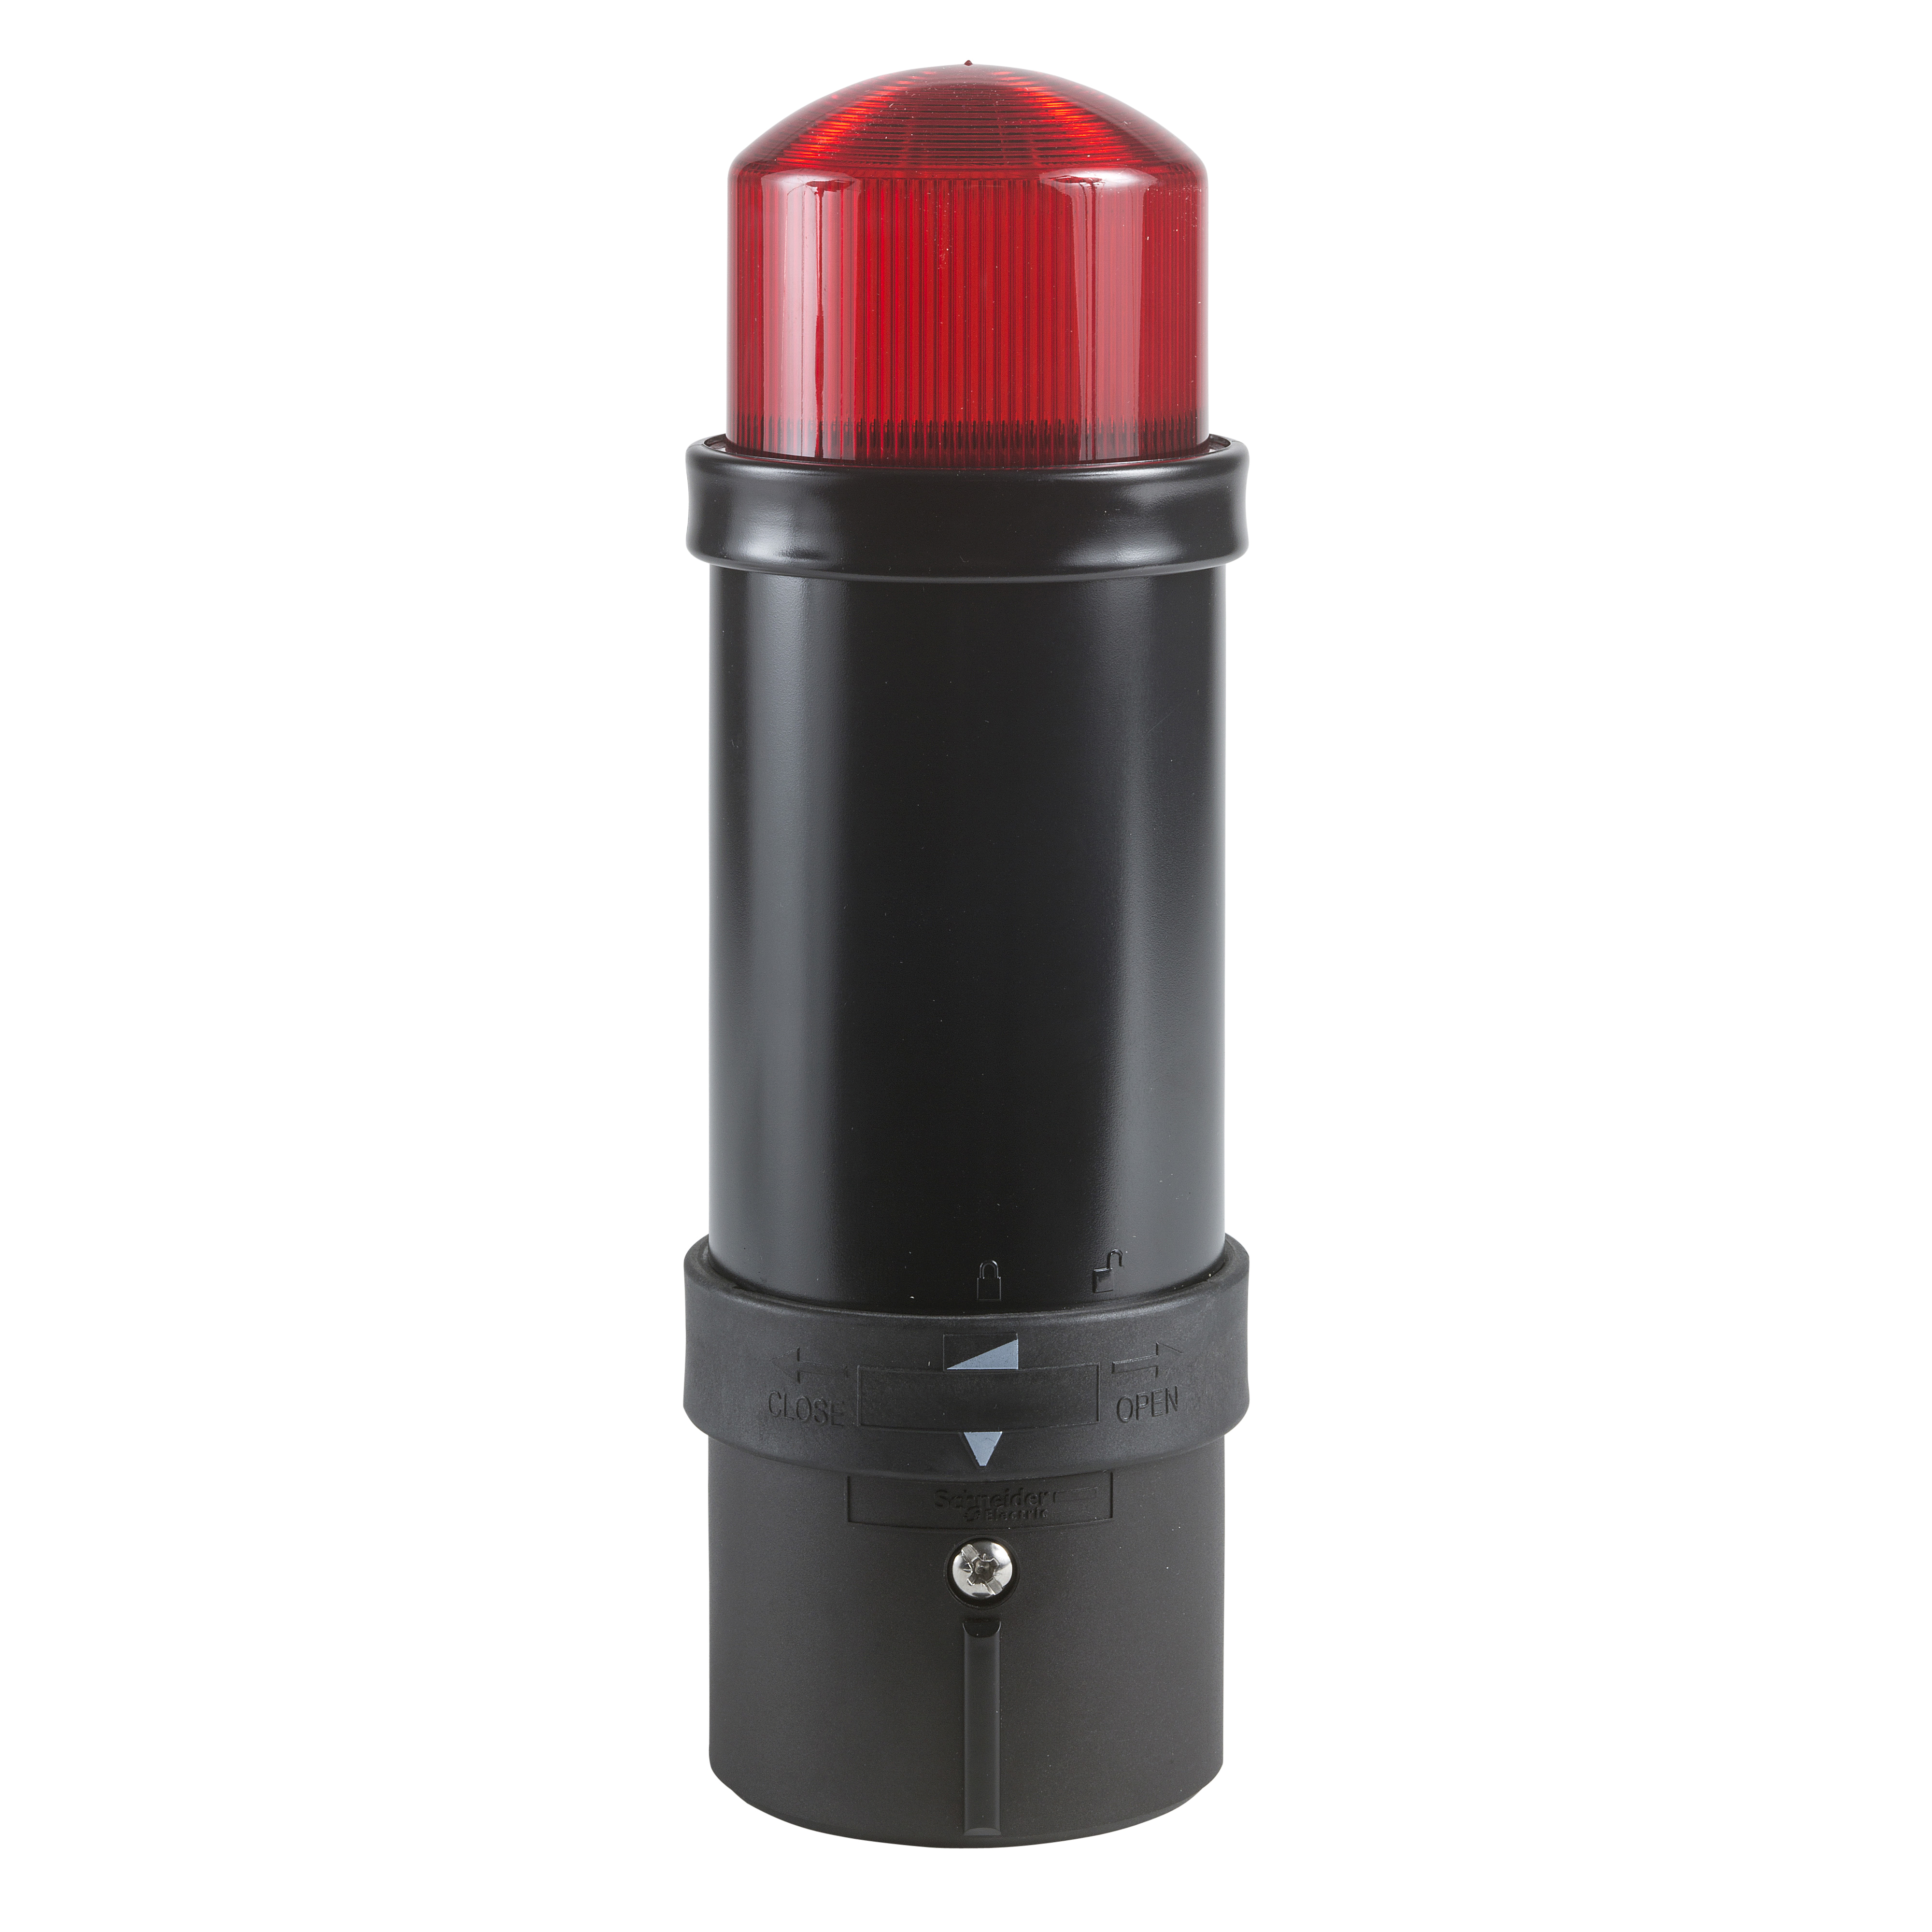 Illuminated beacon, Harmony XVB, plastic, red, 70mm, flashing, integral flash discharge tube, 10 joule, 24V AC DC